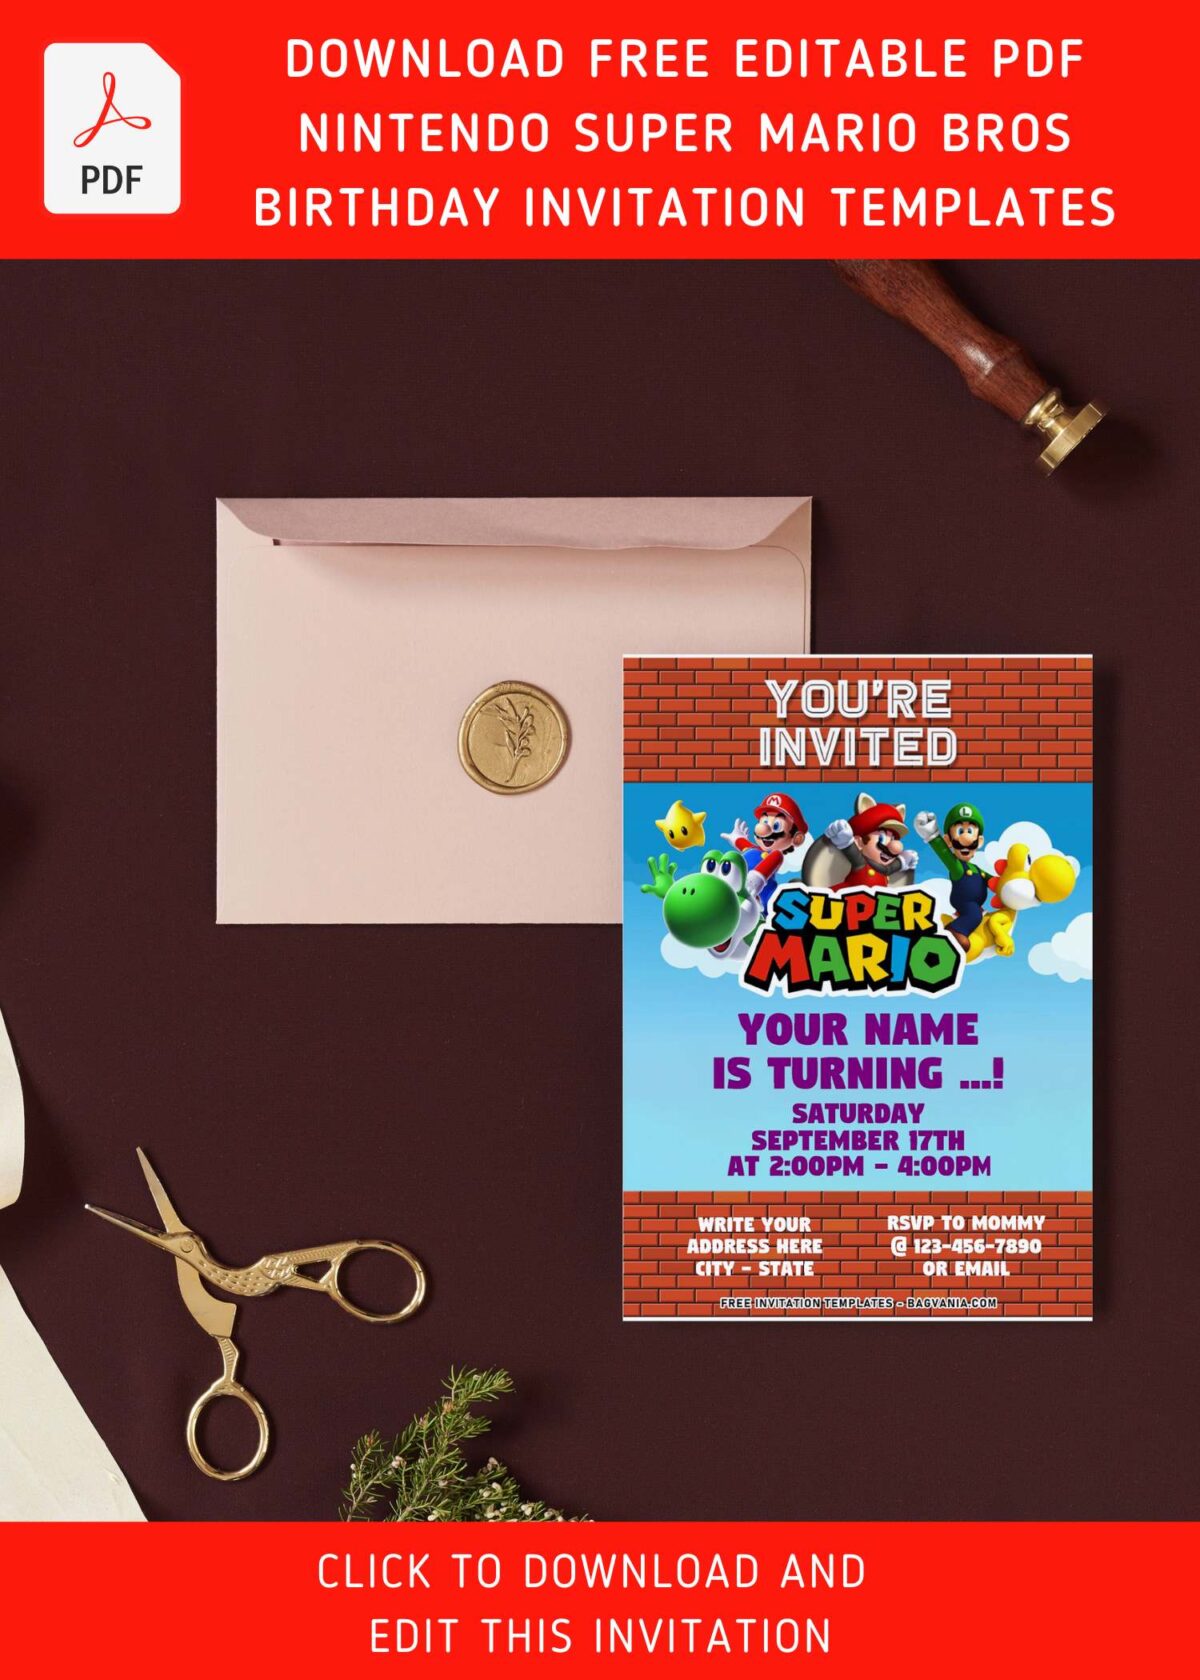 (Free Editable PDF) Super Mario Bros Sunshine Birthday Invitation Templates with Mario World Background